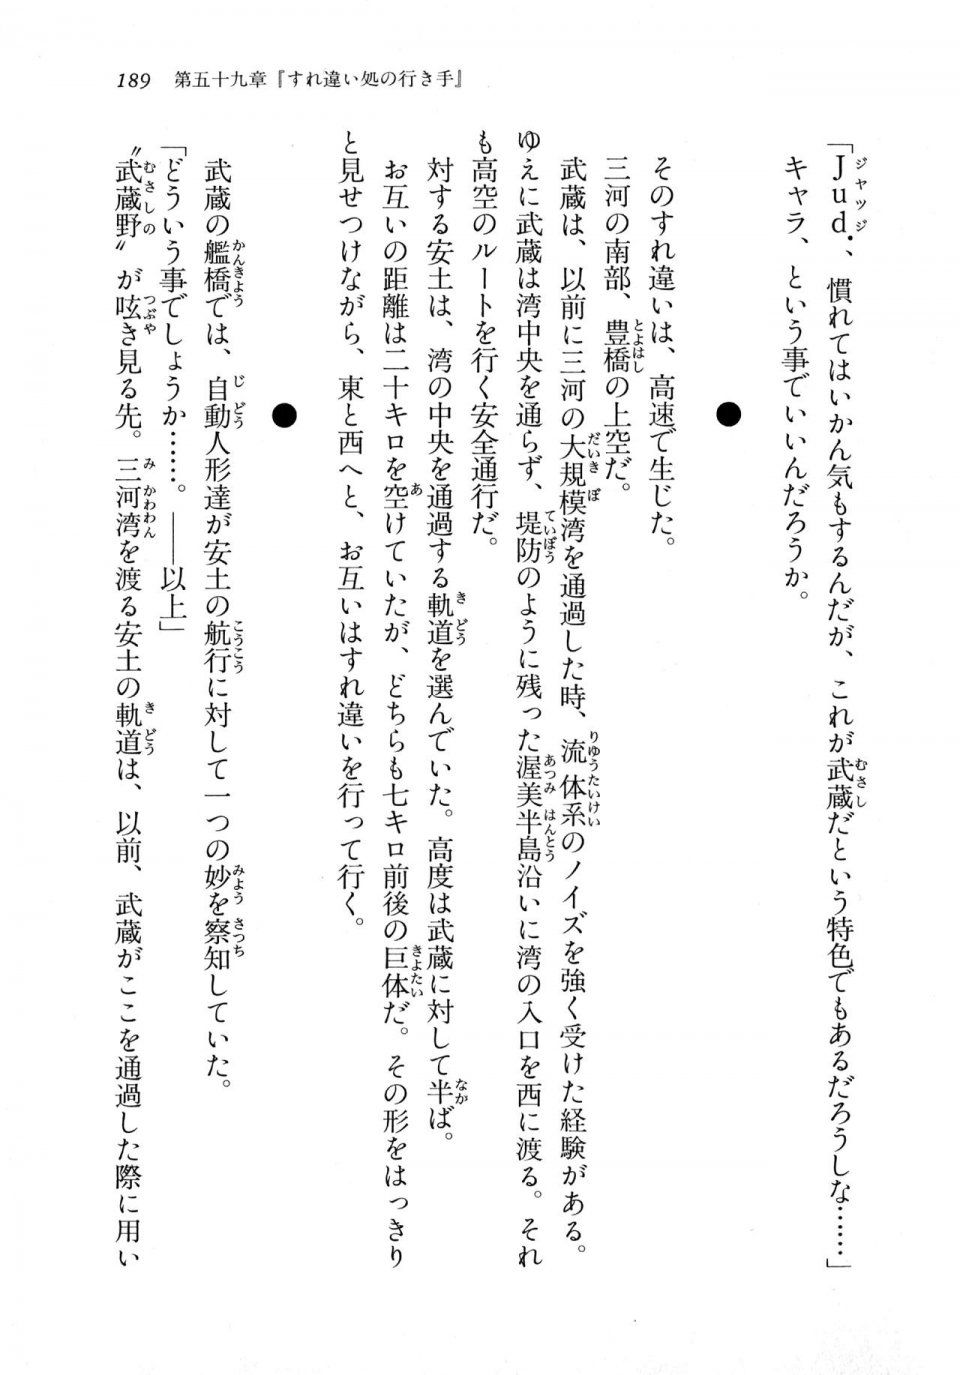 Kyoukai Senjou no Horizon LN Vol 18(7C) Part 1 - Photo #189